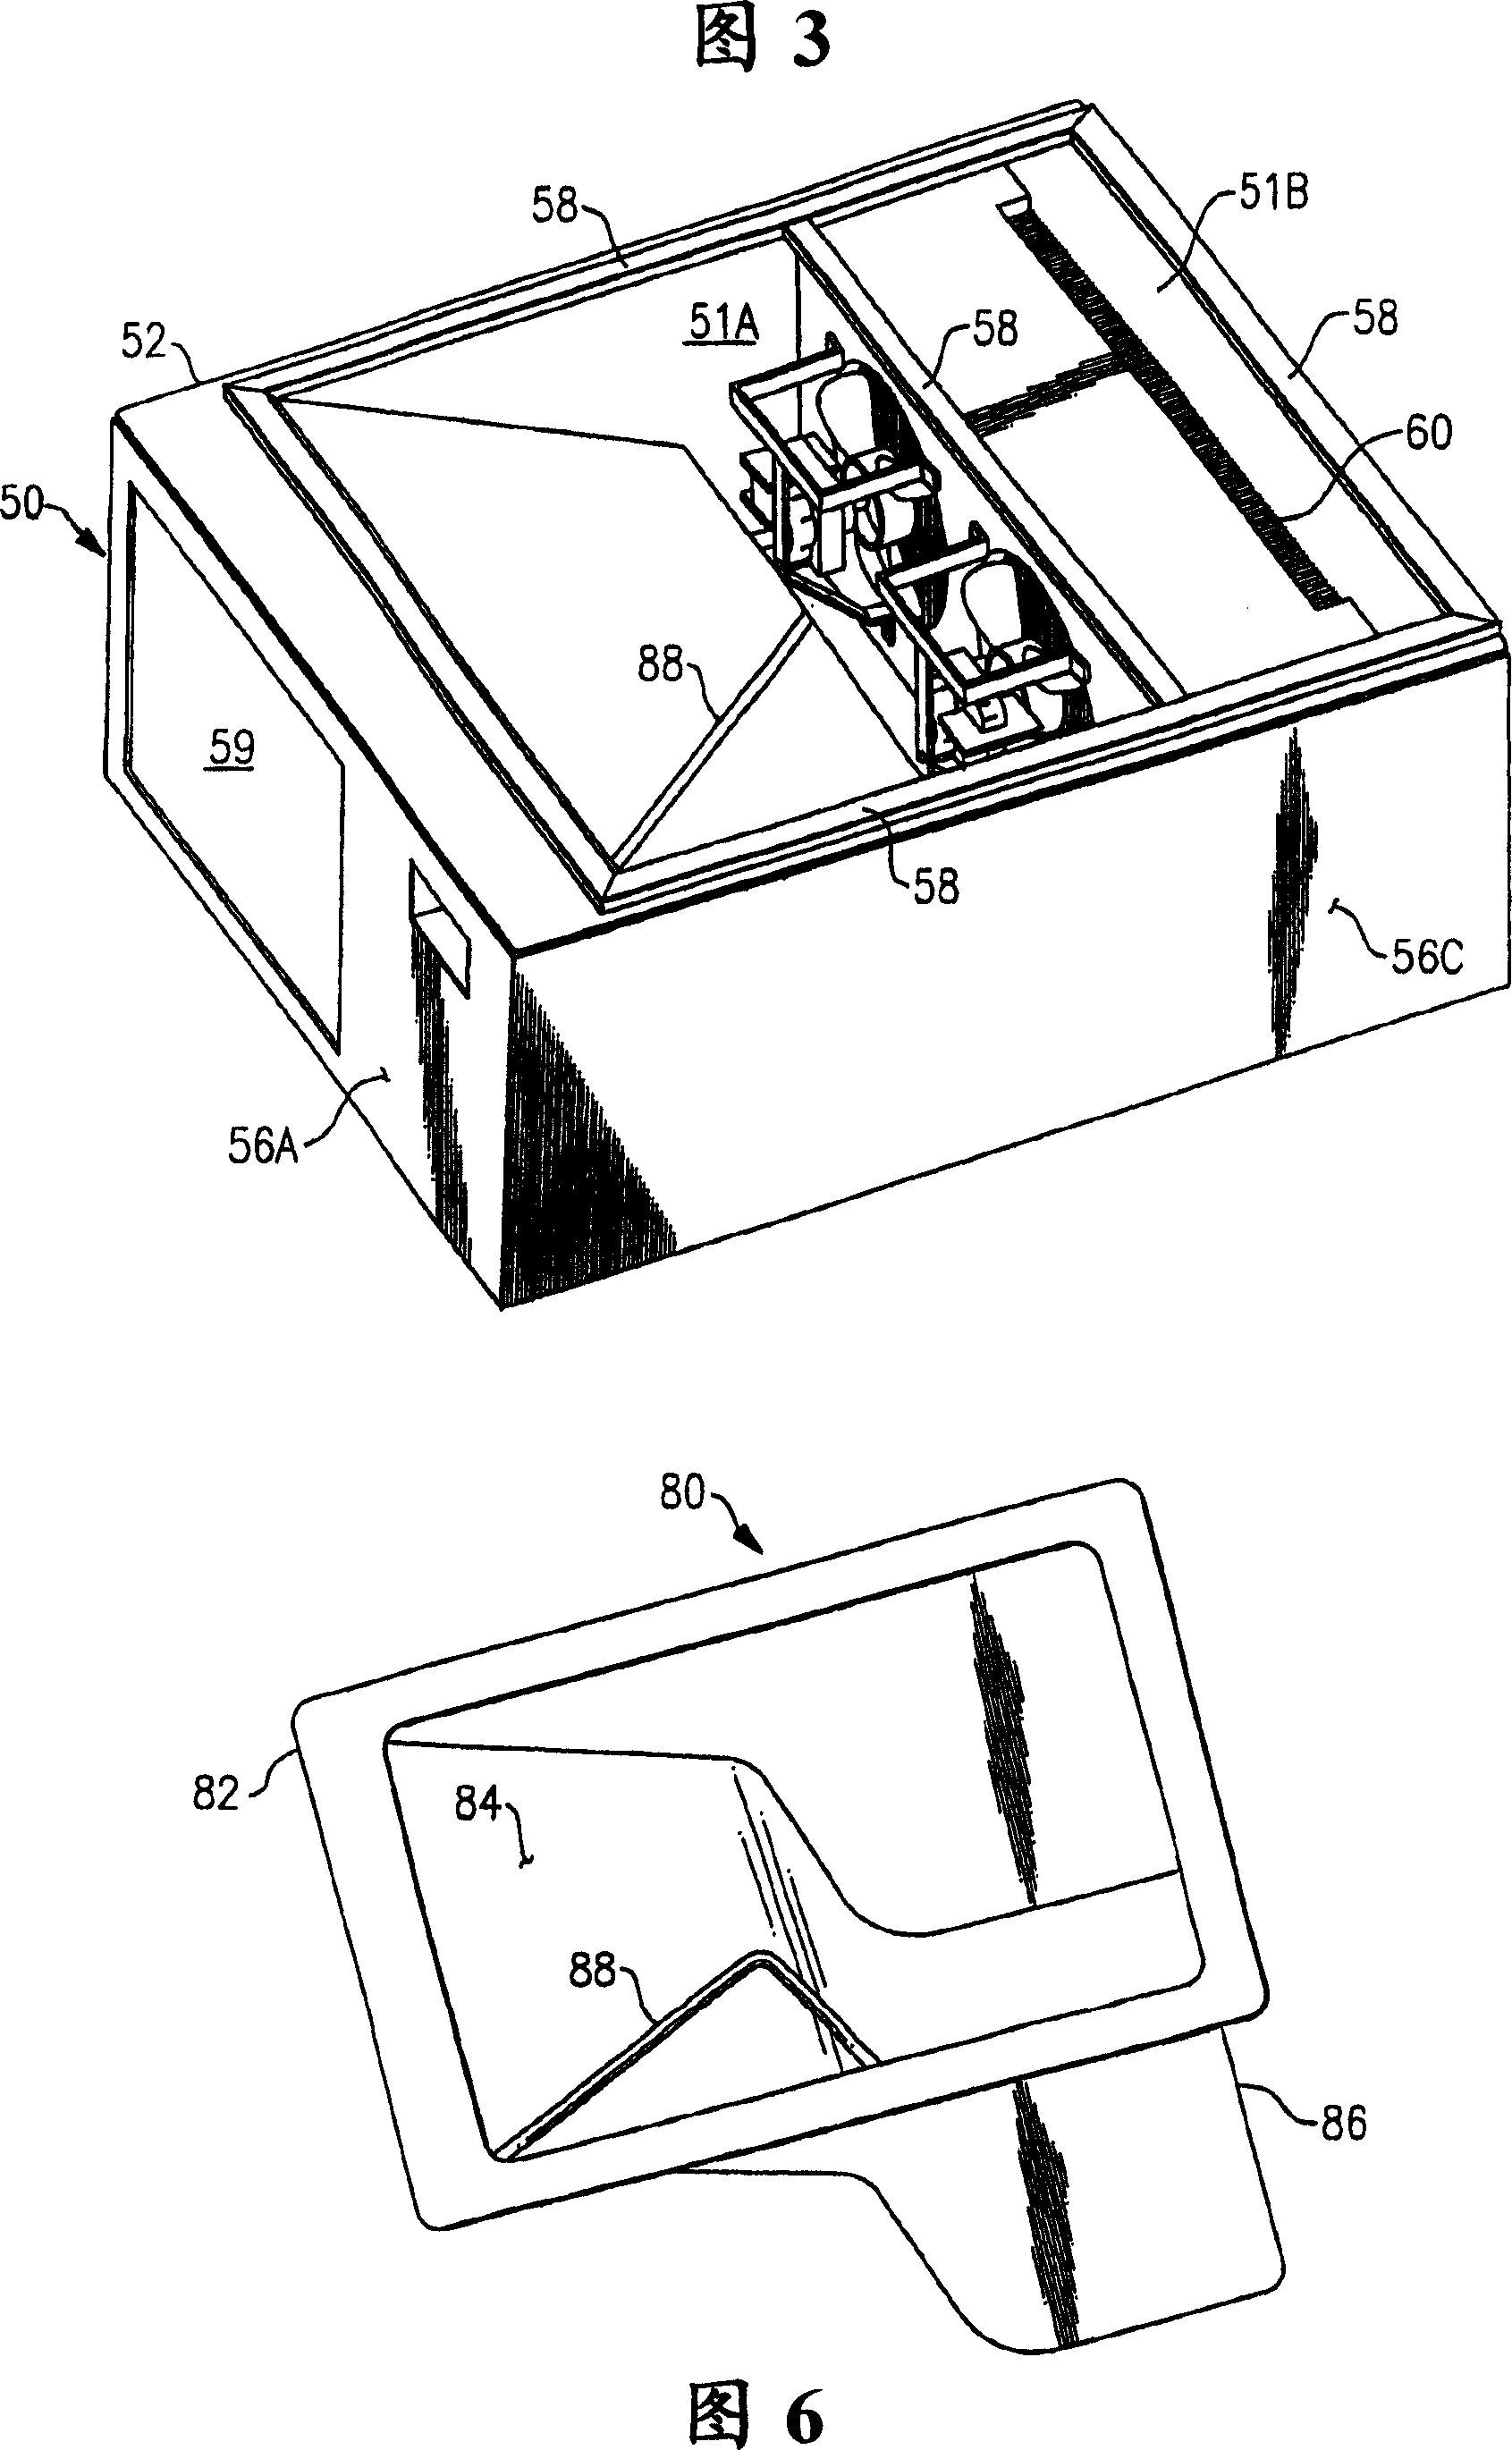 Modular refrigeration cassette with condensate evaporative tray